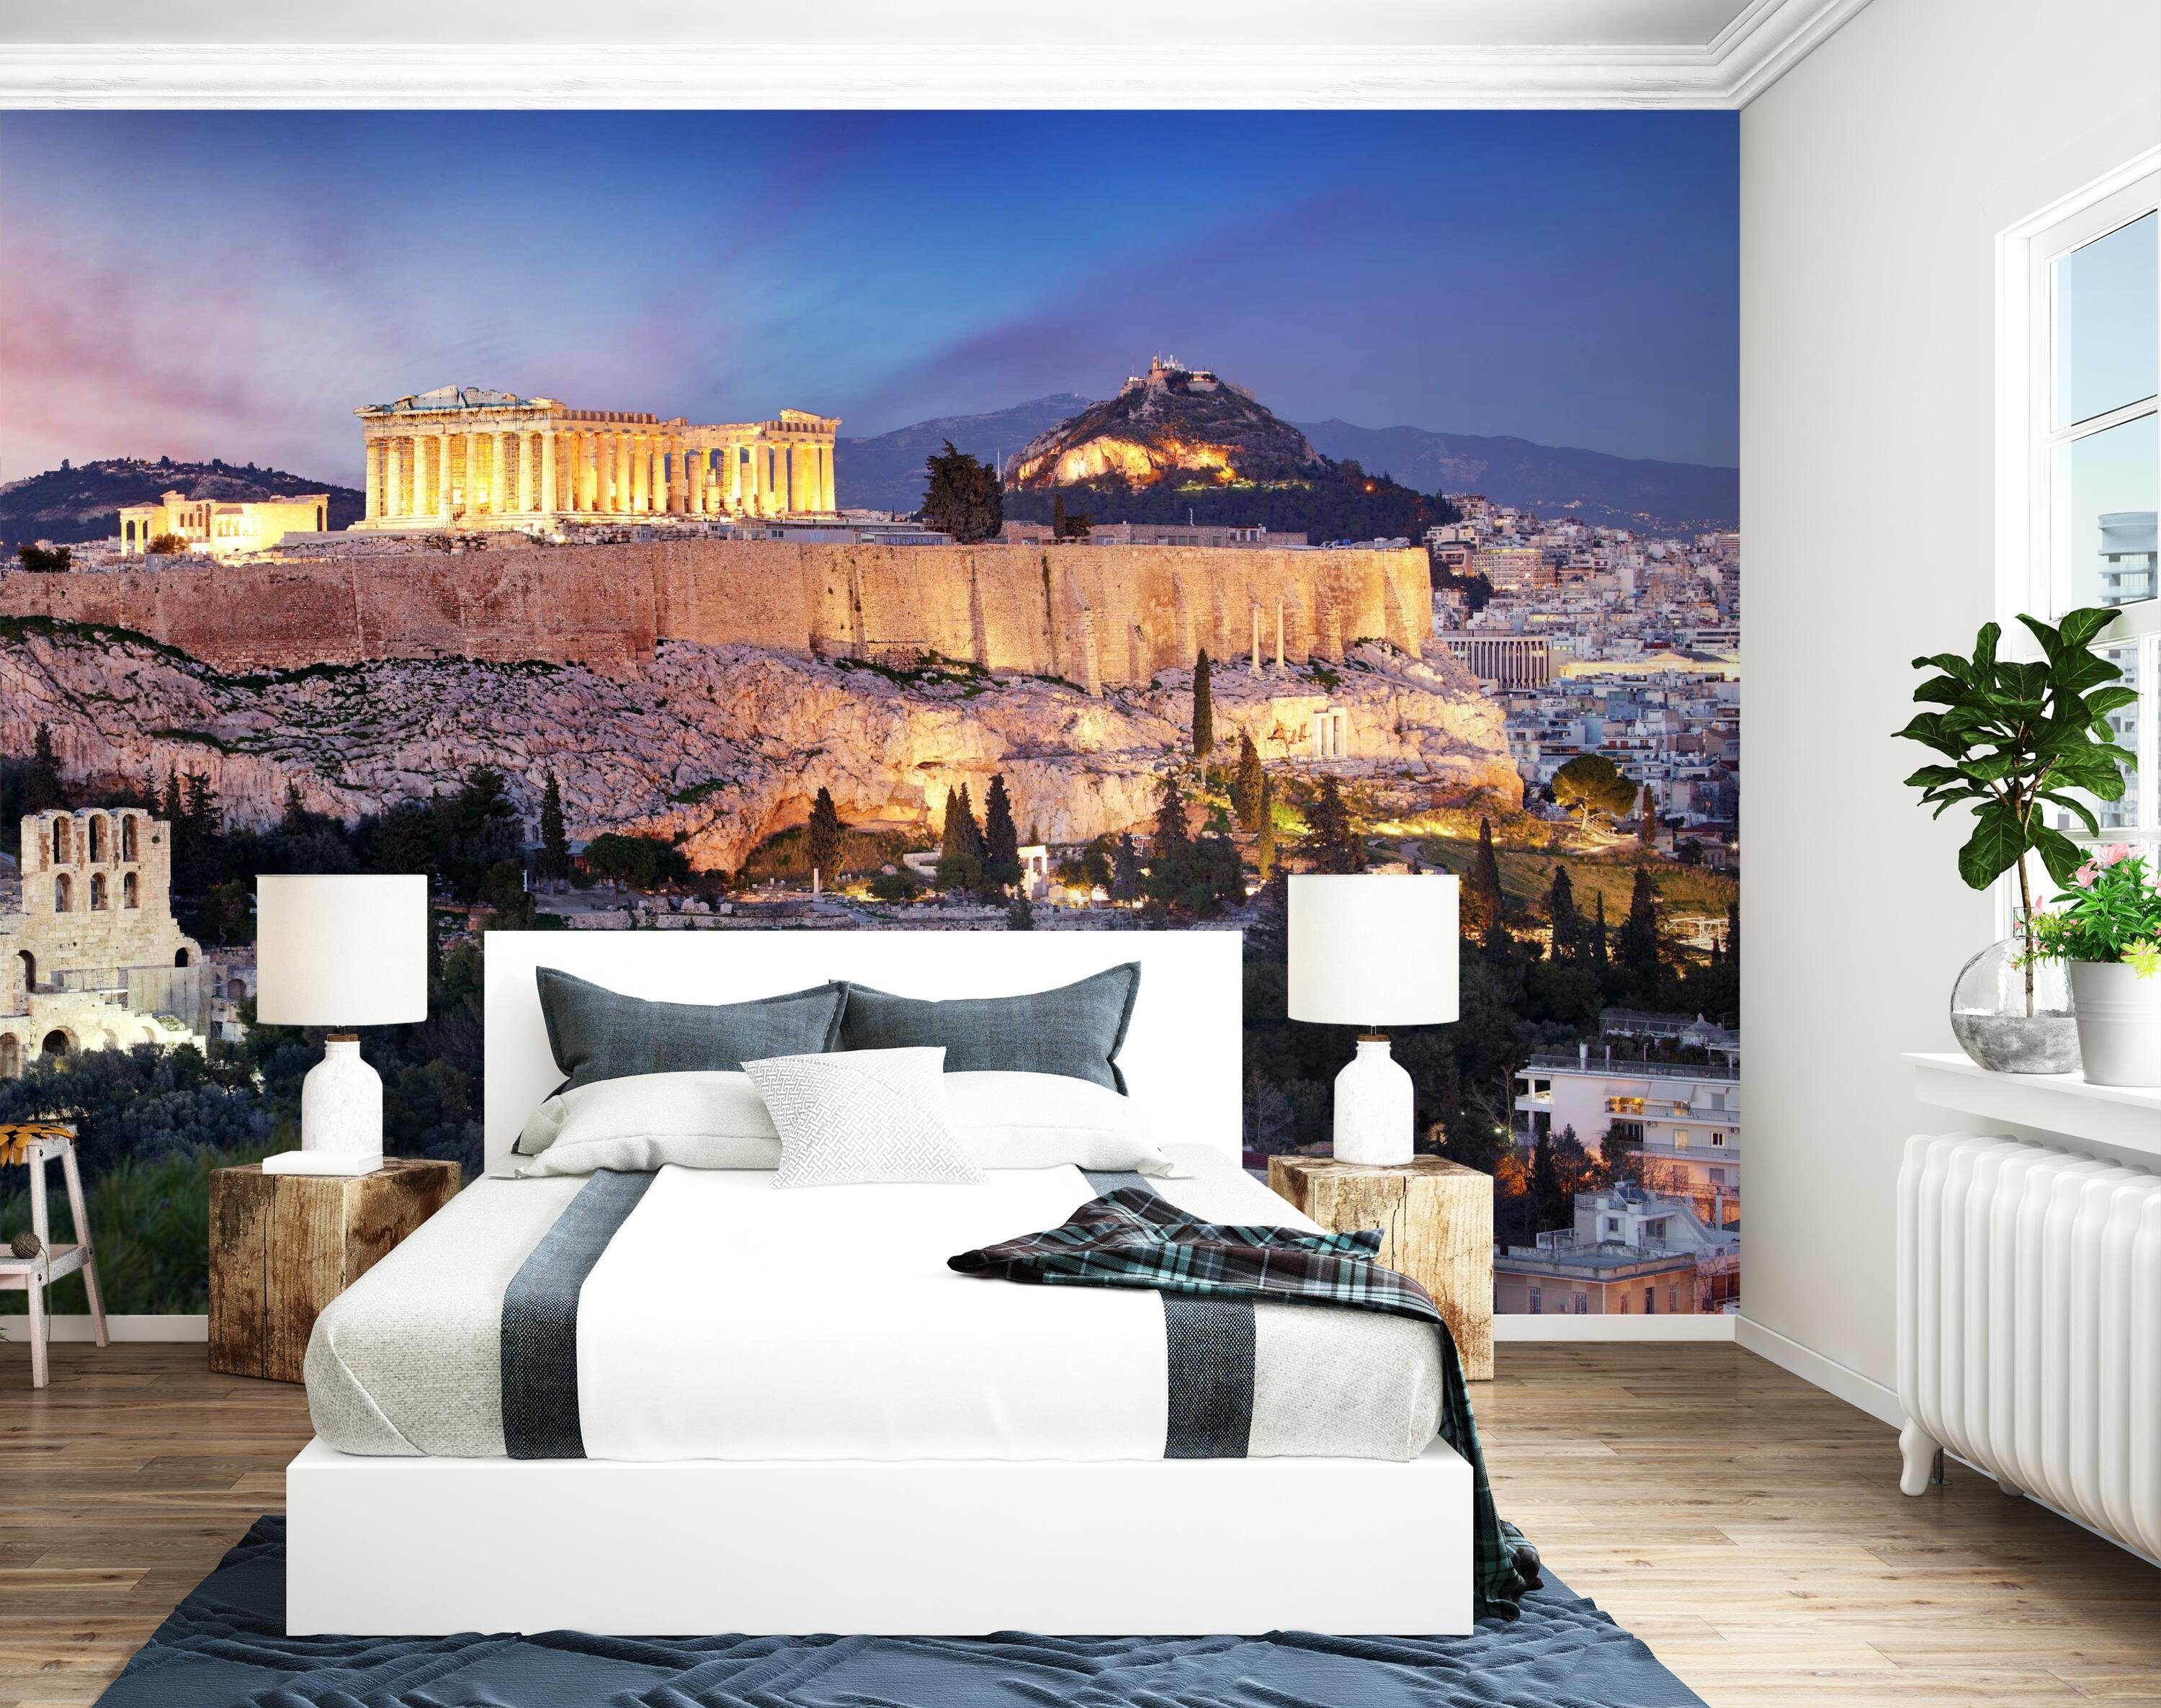 Wandtapete, Vliestapete Stil, glatt, matt, Gebäude im Motivtapete, wandmotiv24 Fototapete Griechischen